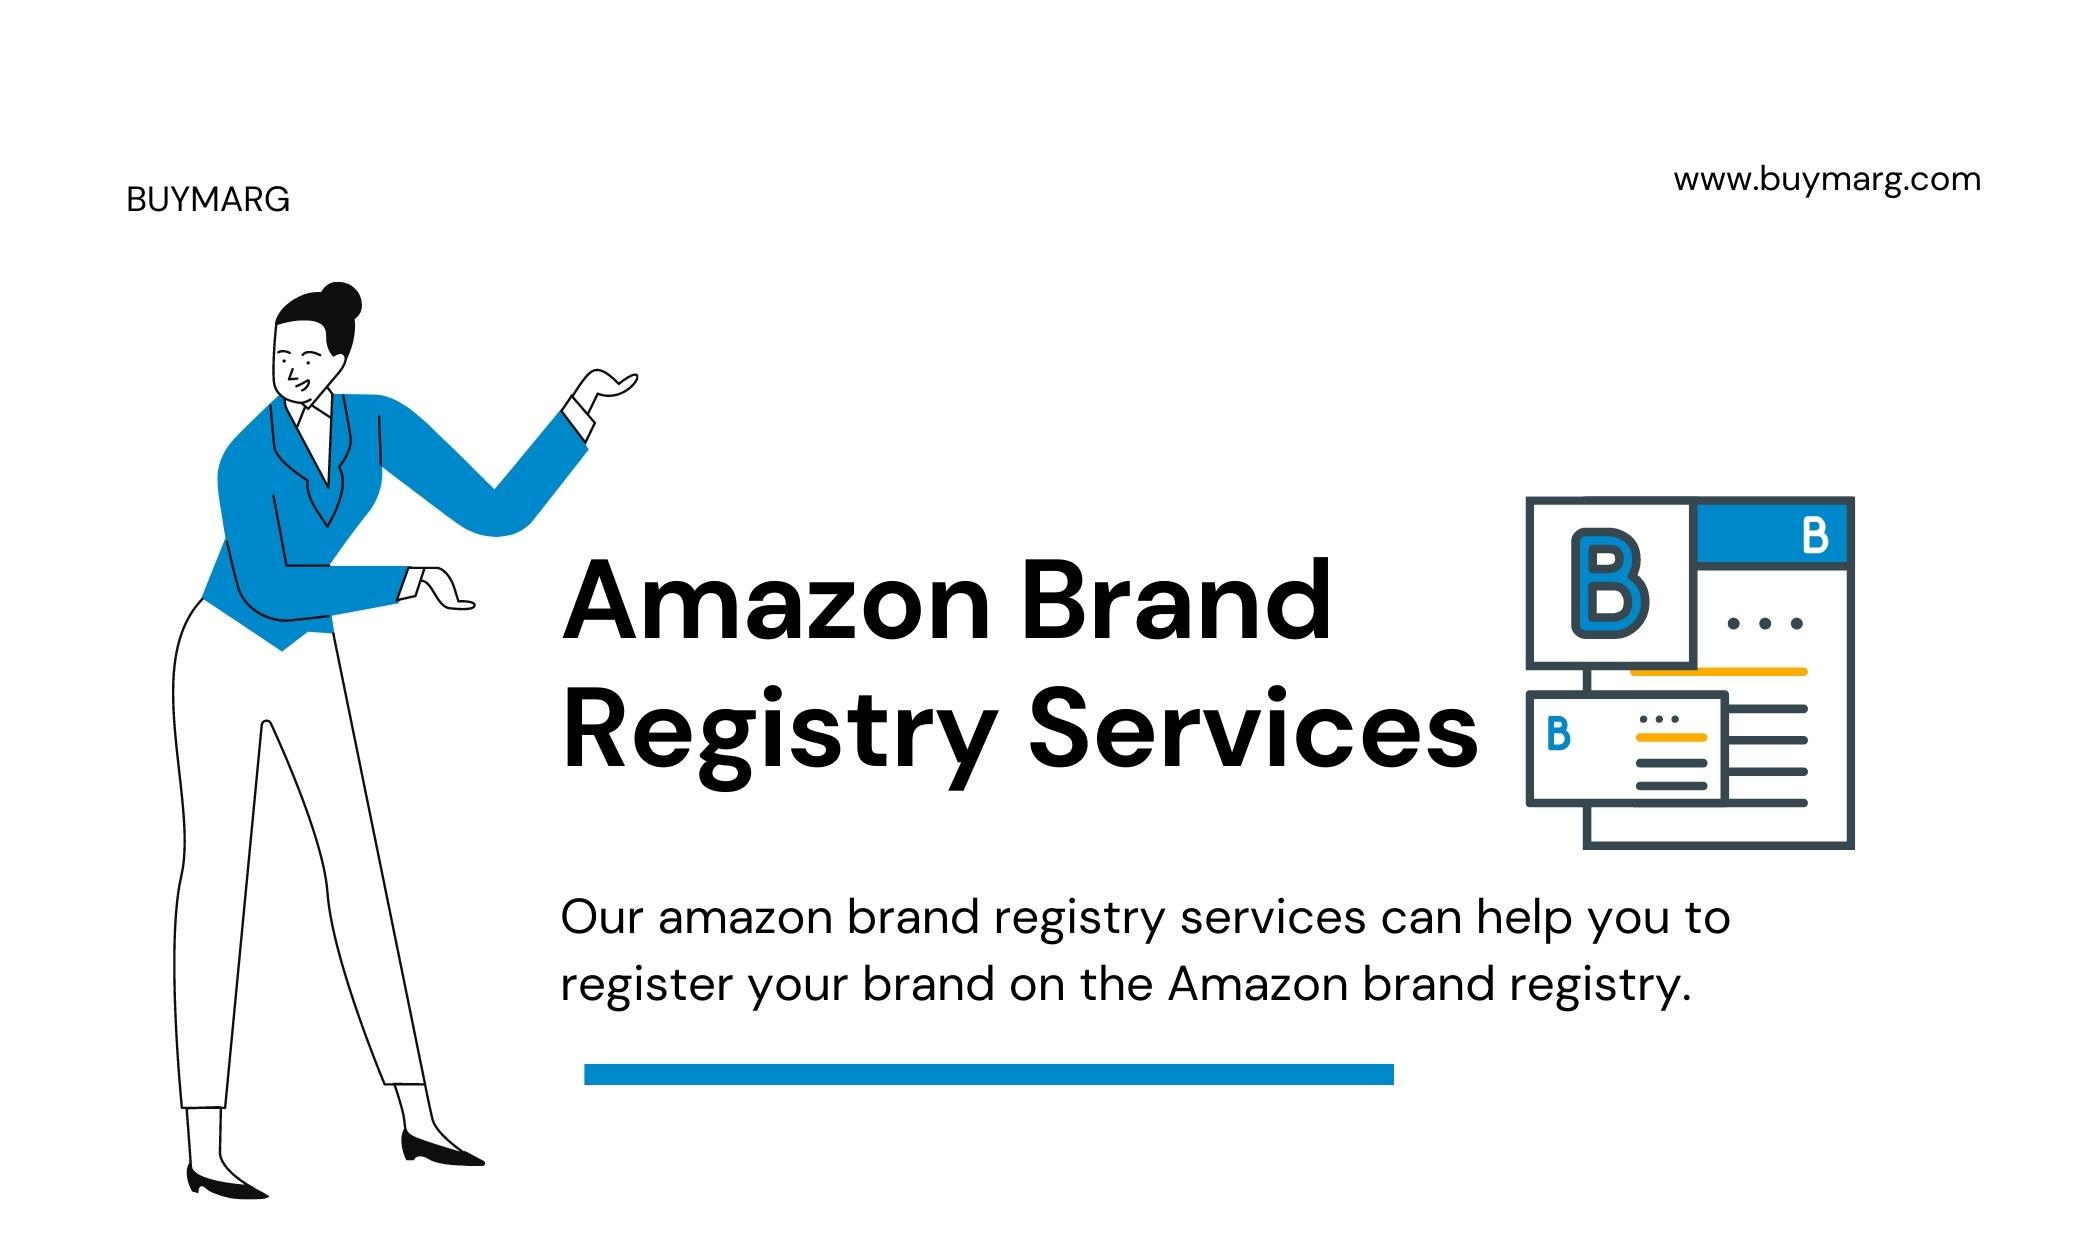 Amazon Brand Registry Services